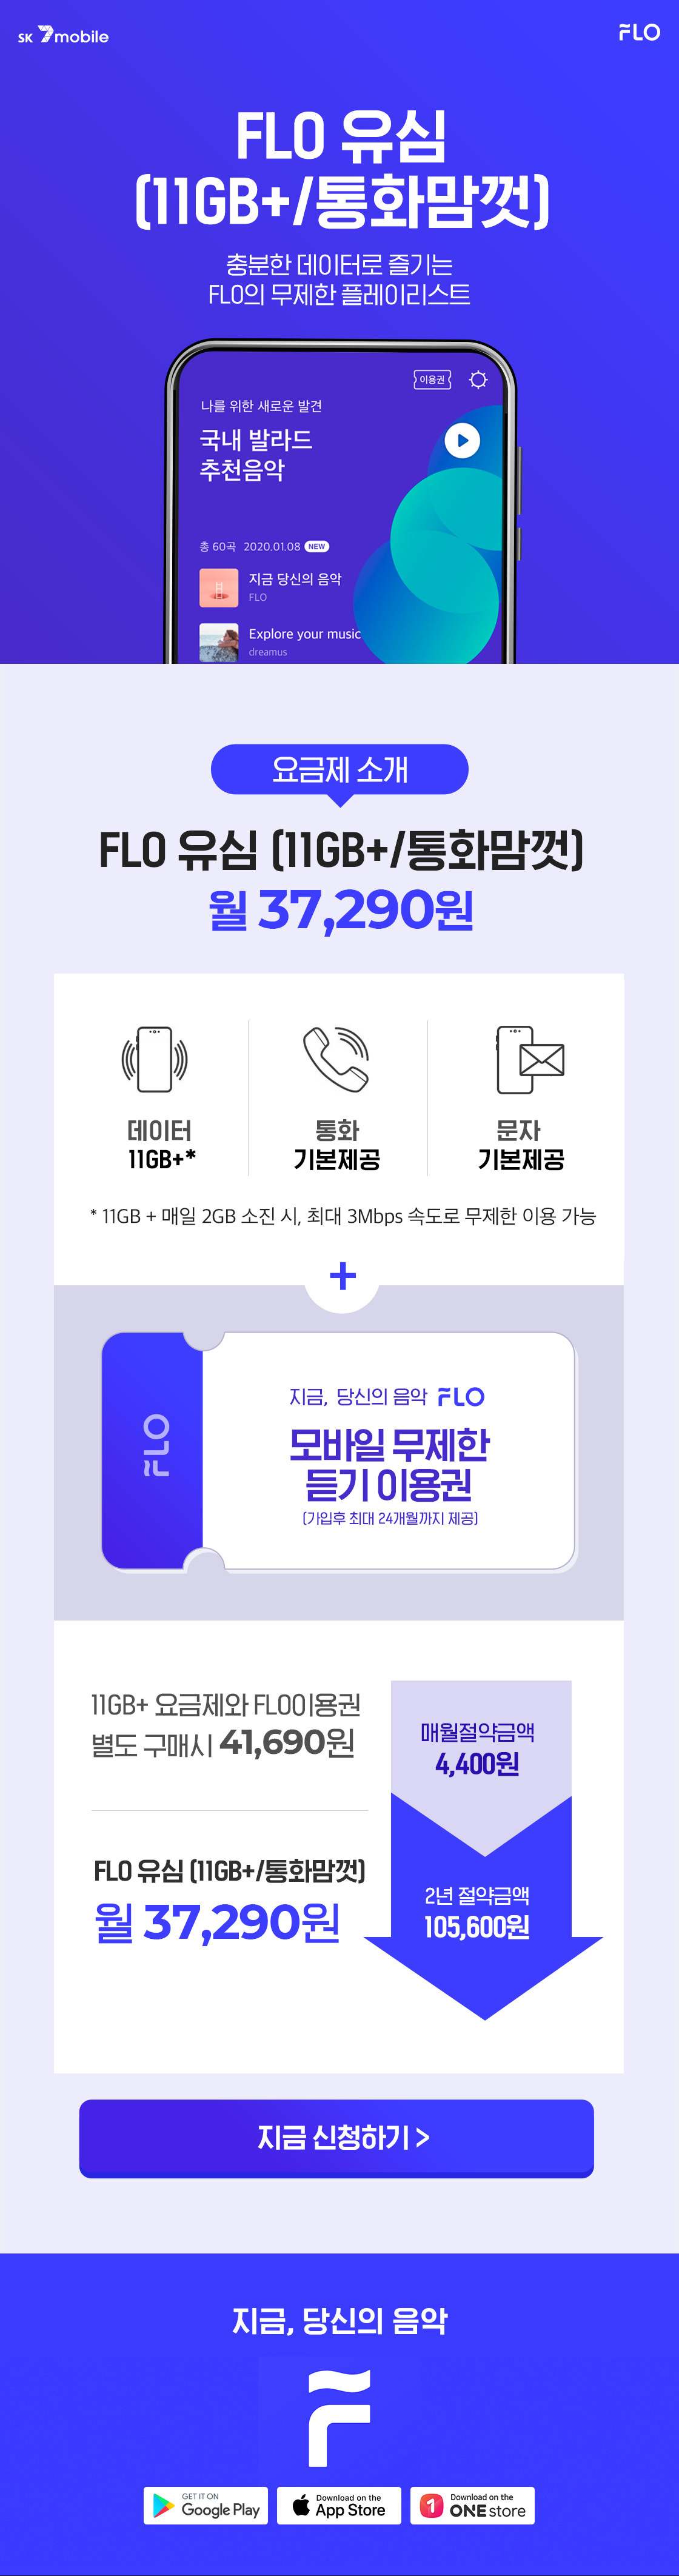 FLO 유심 (11GB+/통화맘껏) 충분한 데이터로 즐기는 FLO의 무제한 플레이리스트